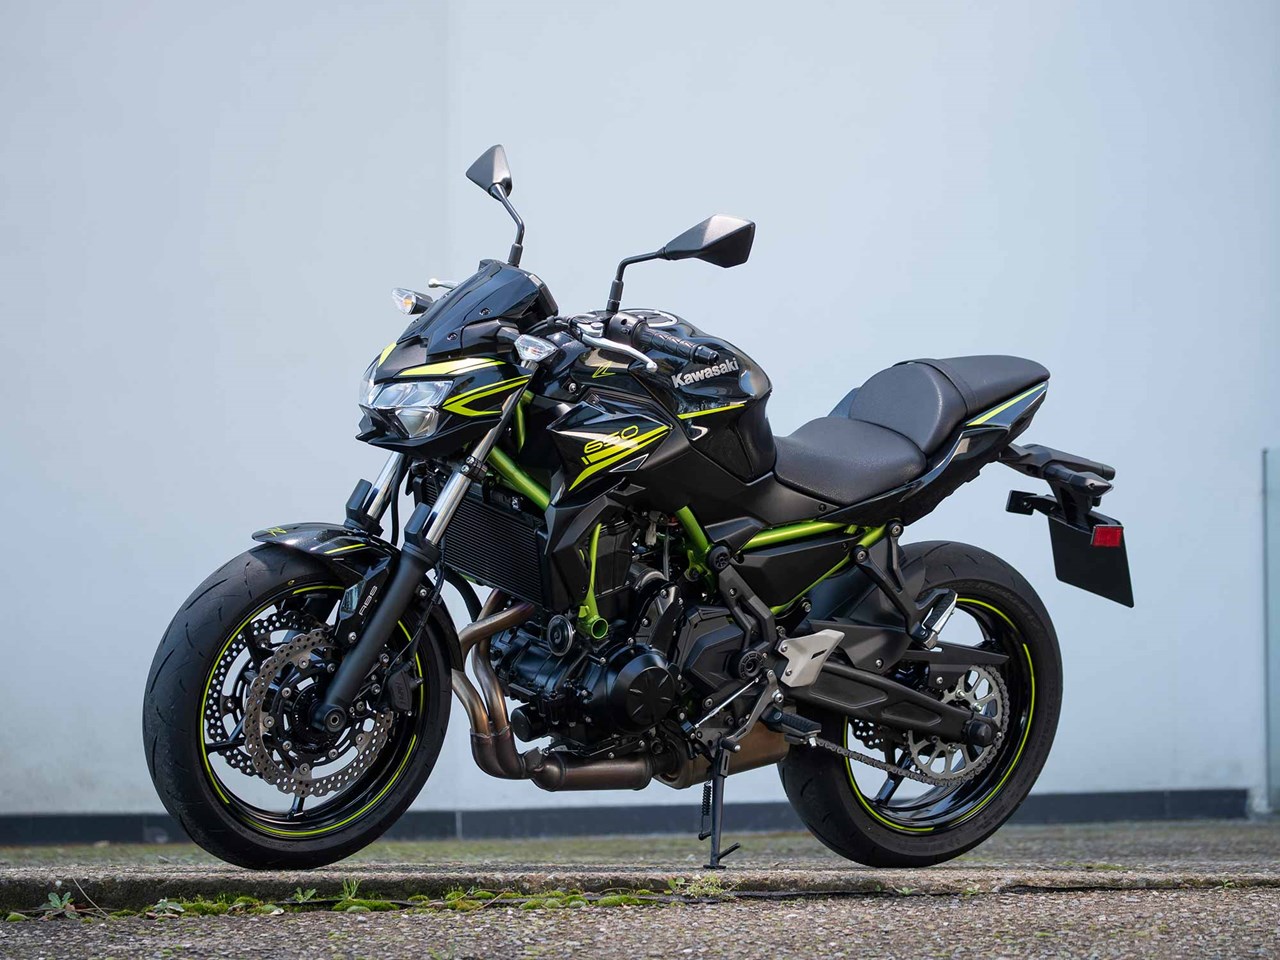 2020 Kawasaki Z650 Review (11 Fast Facts - Urban + Sport Motorcycle)